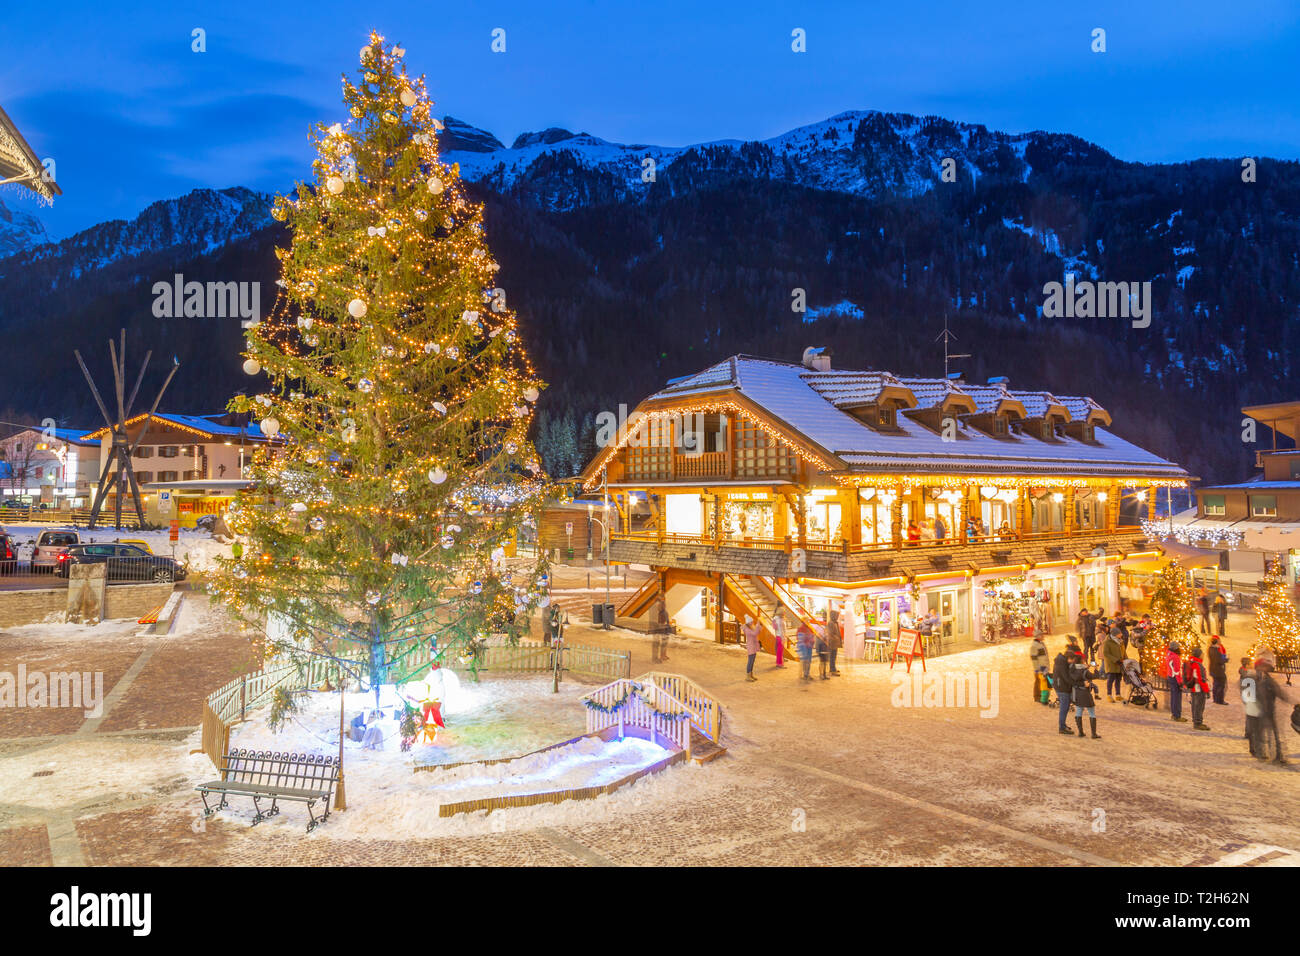 Christmas tree in Canazei, Italy, Europe Stock Photo